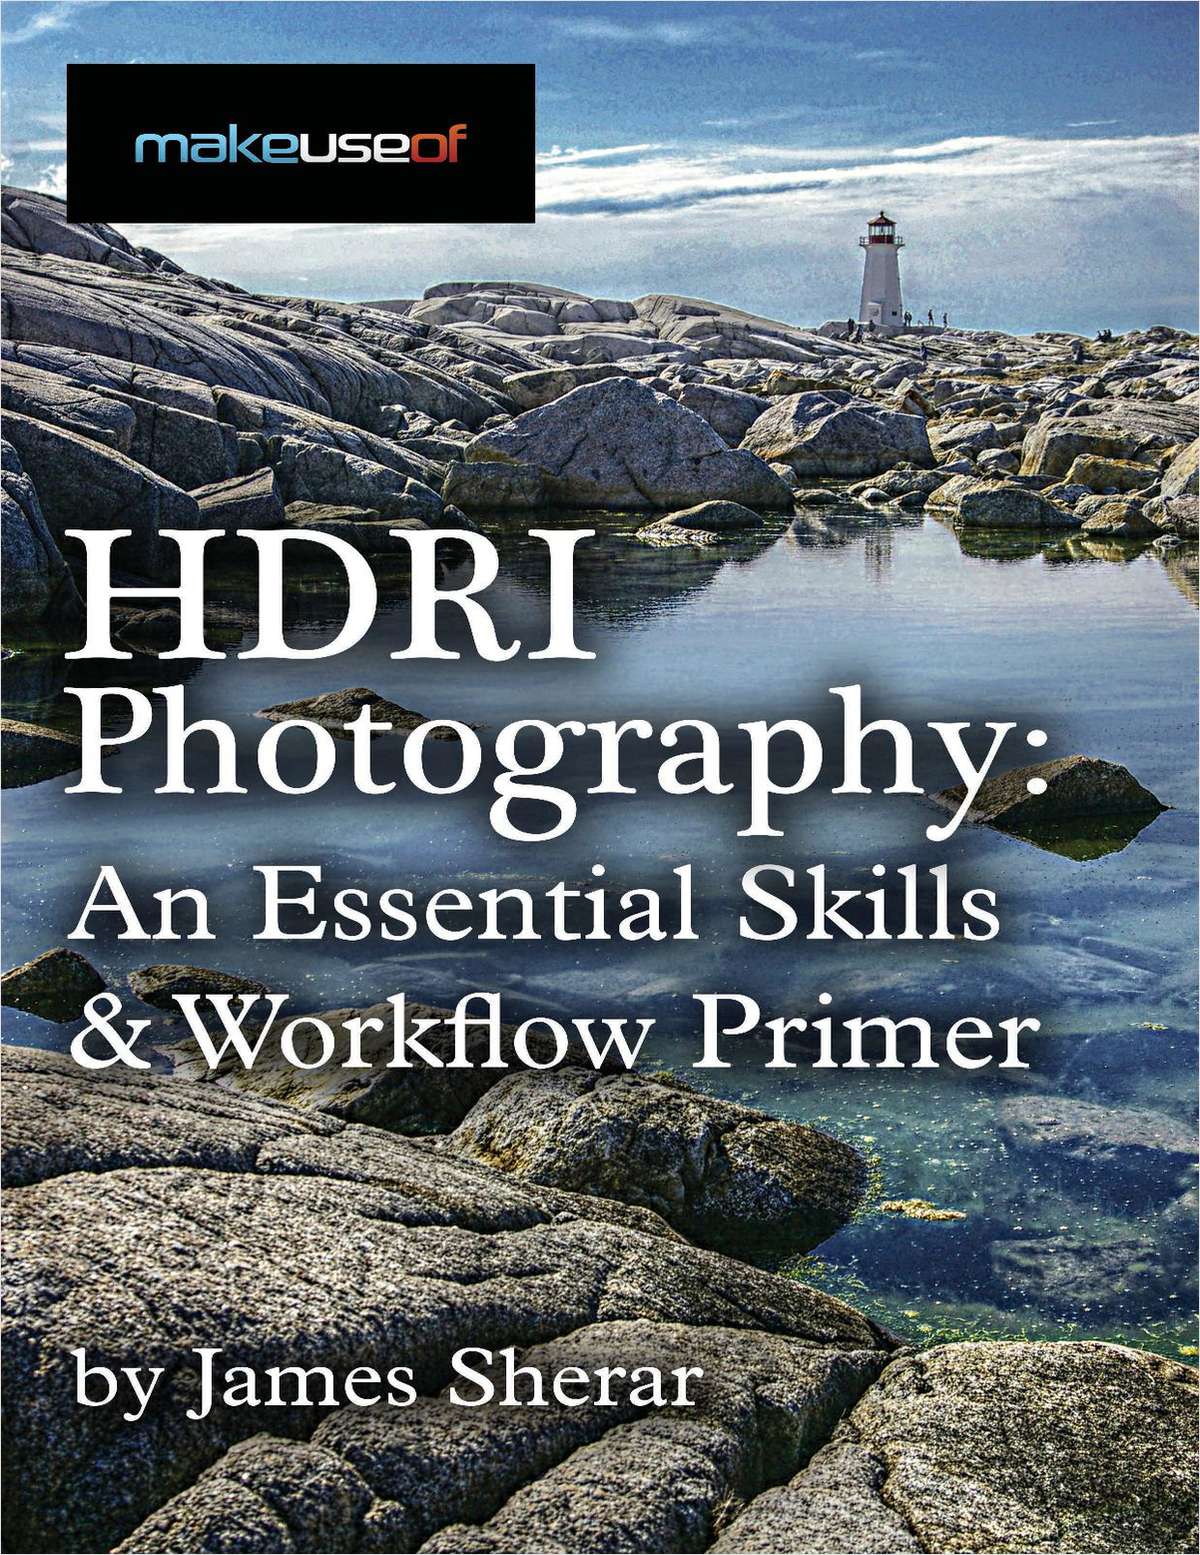 HDRI Photography